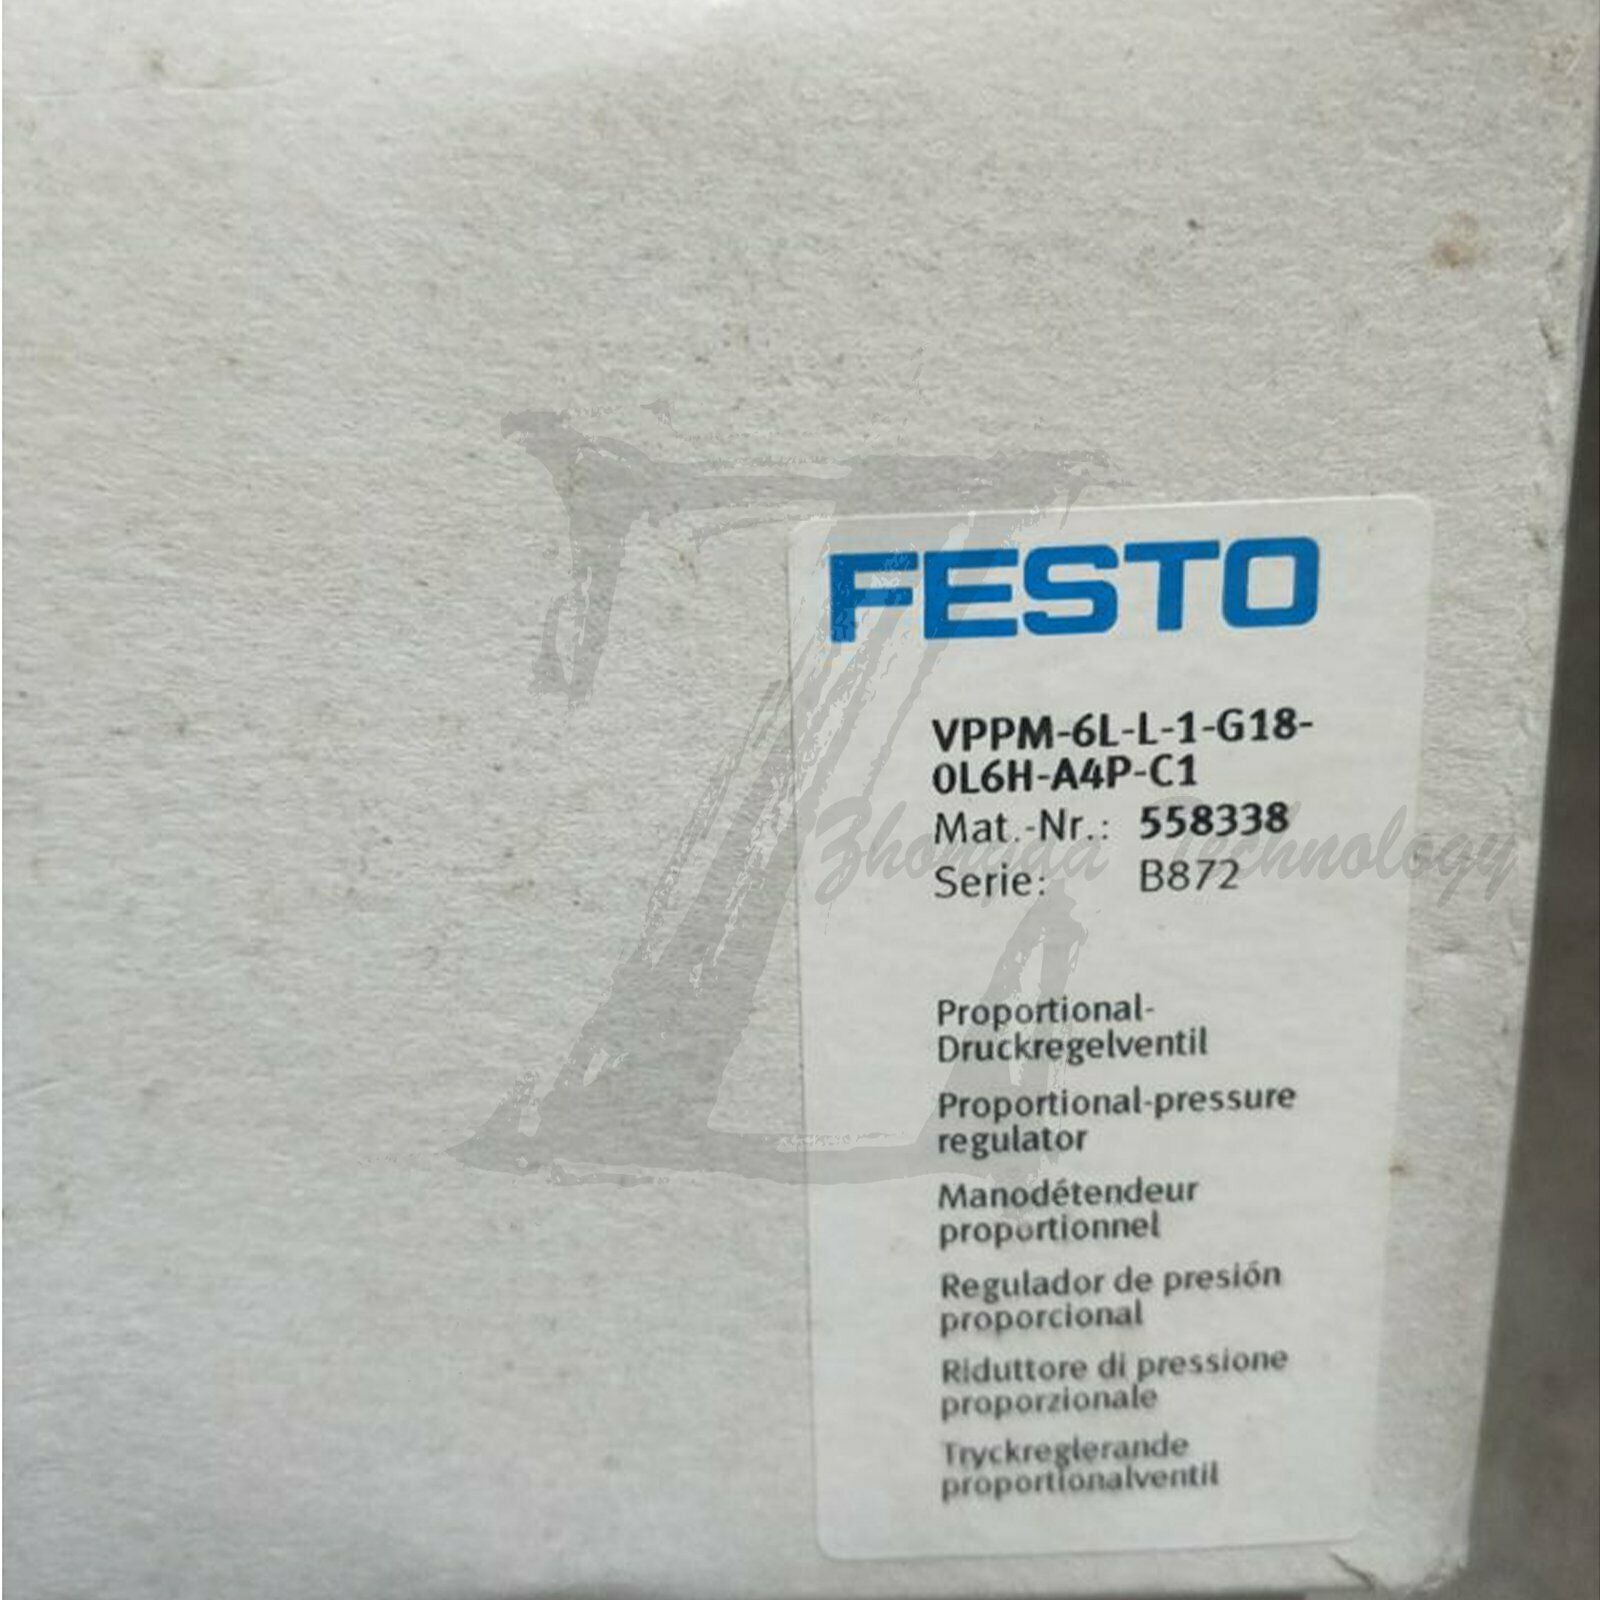 1PC new Festo proportional valve VPPM-6L-L-1-G18-0L6H-A4P-C1 (558338) KOEED 500+, 80%, FESTO, import_2020_10_10_031751, Other